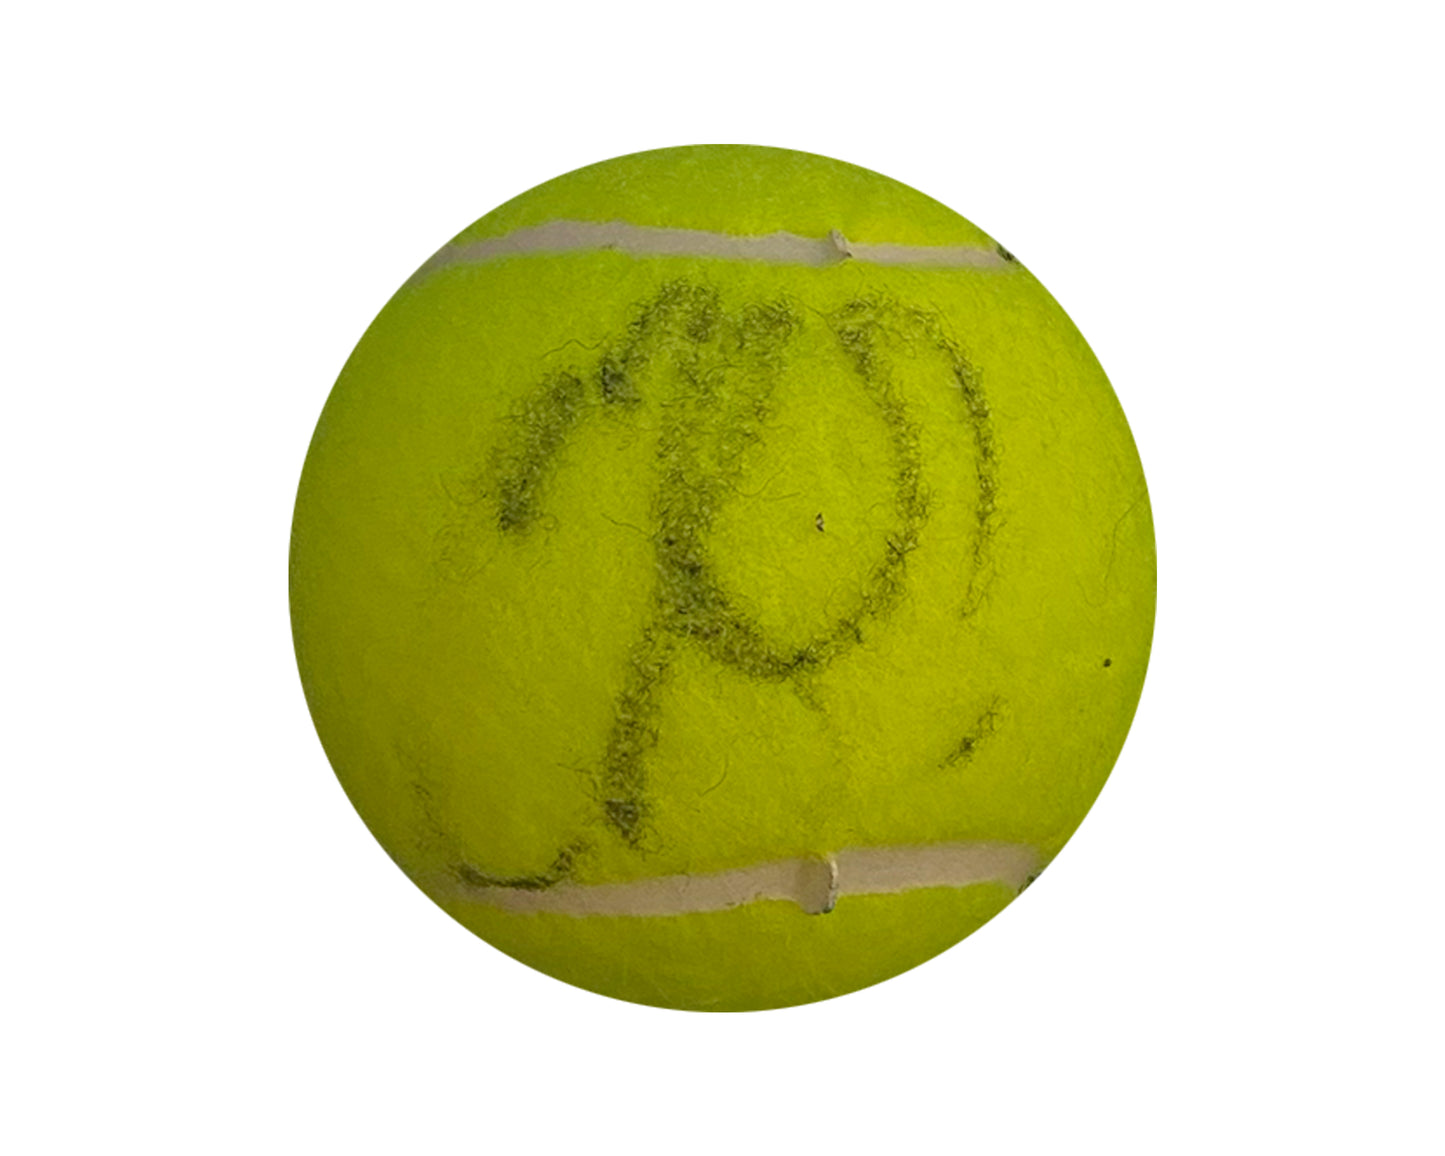 Alexander Zverev Autographed Tennis Ball